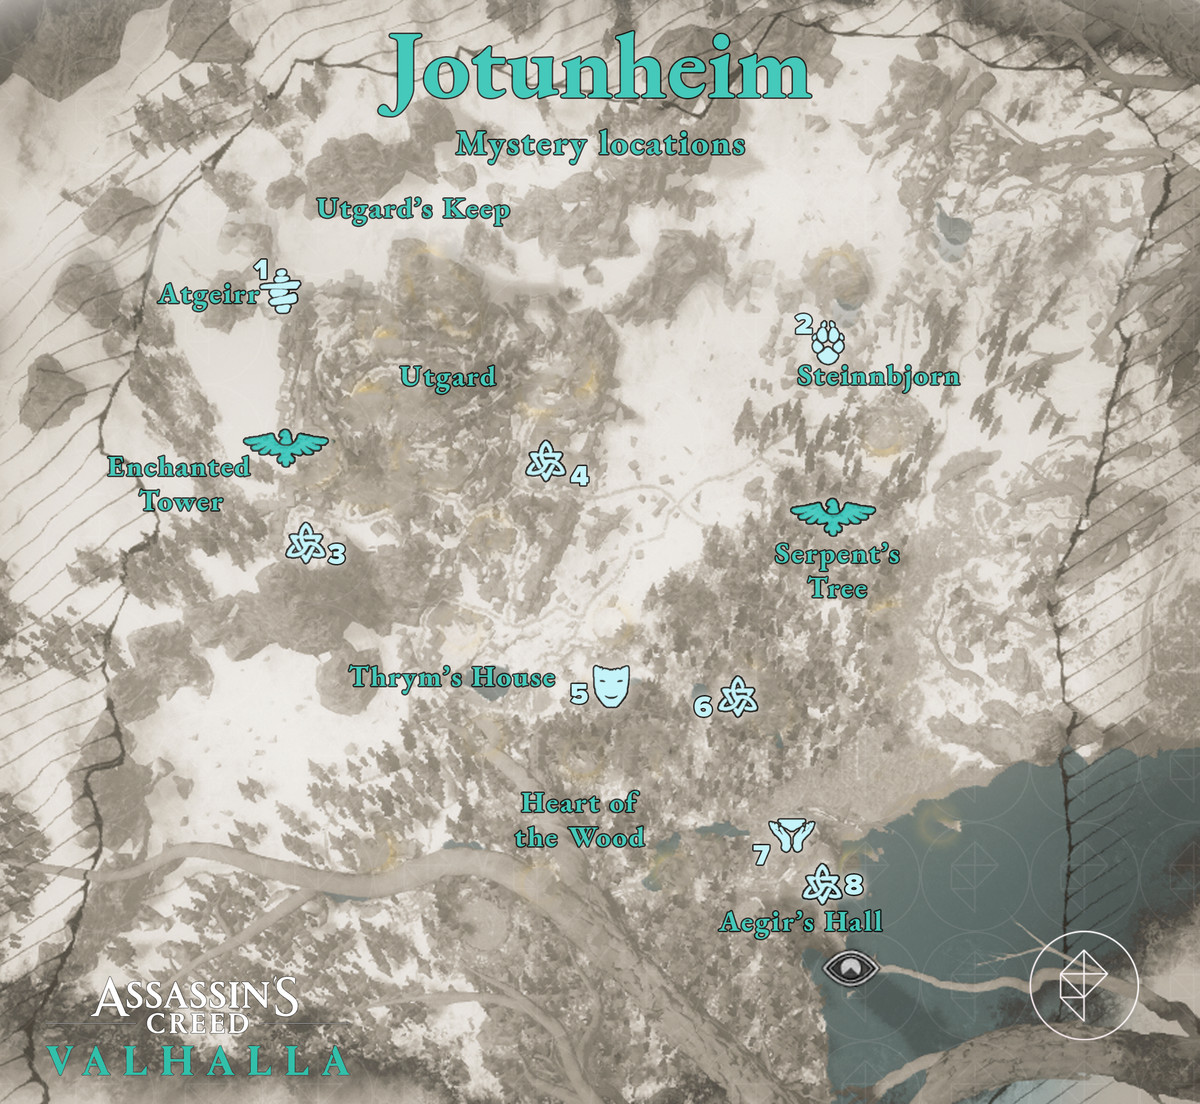 Jotunheim Mysteries locations map 